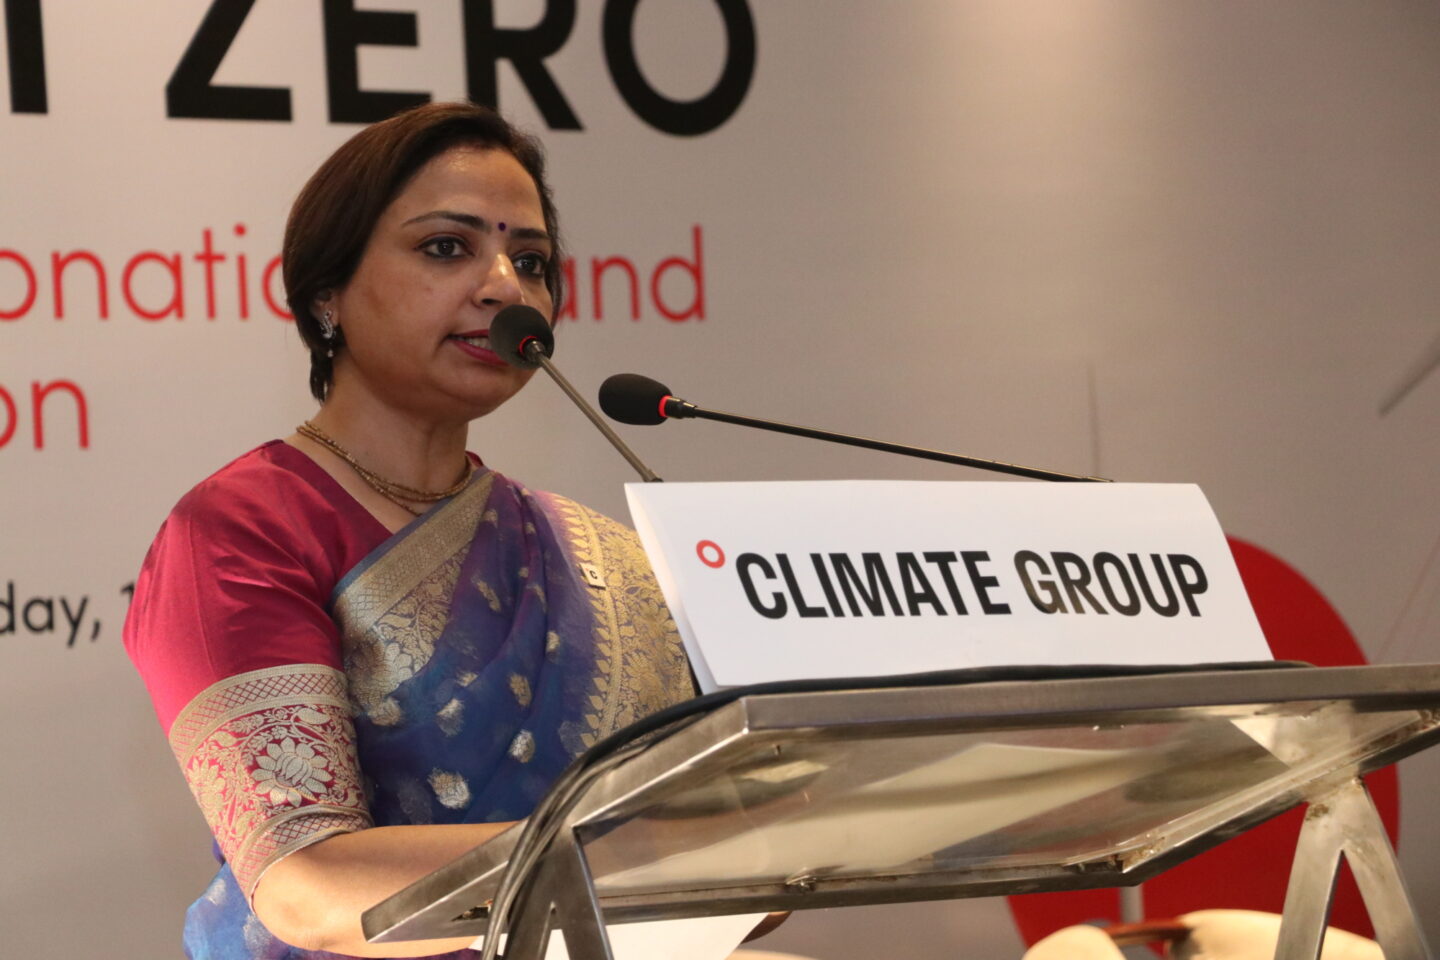 Divya Sharma speaks behind a podium that says Climate Group